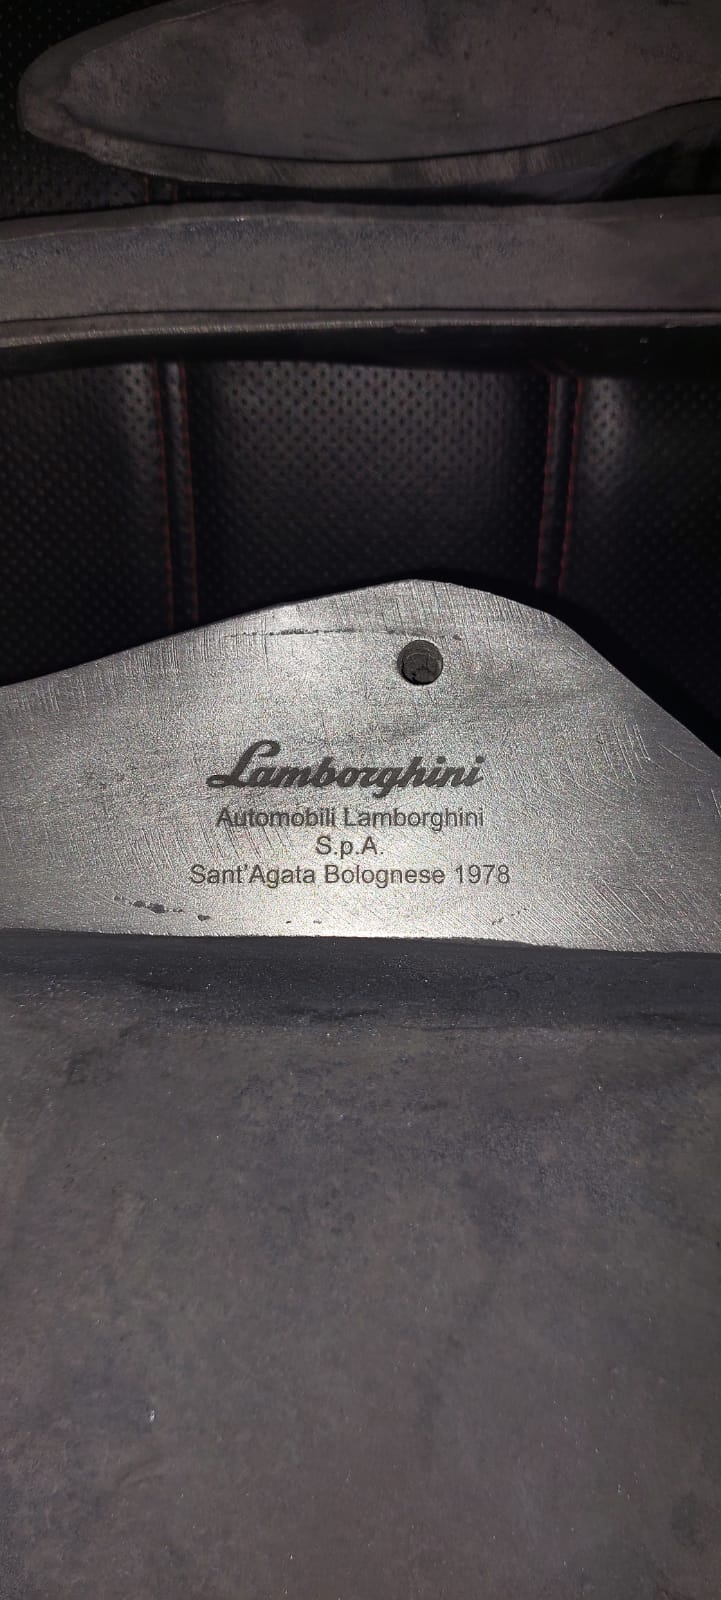 Official Lamborghini dealership Raging Bull